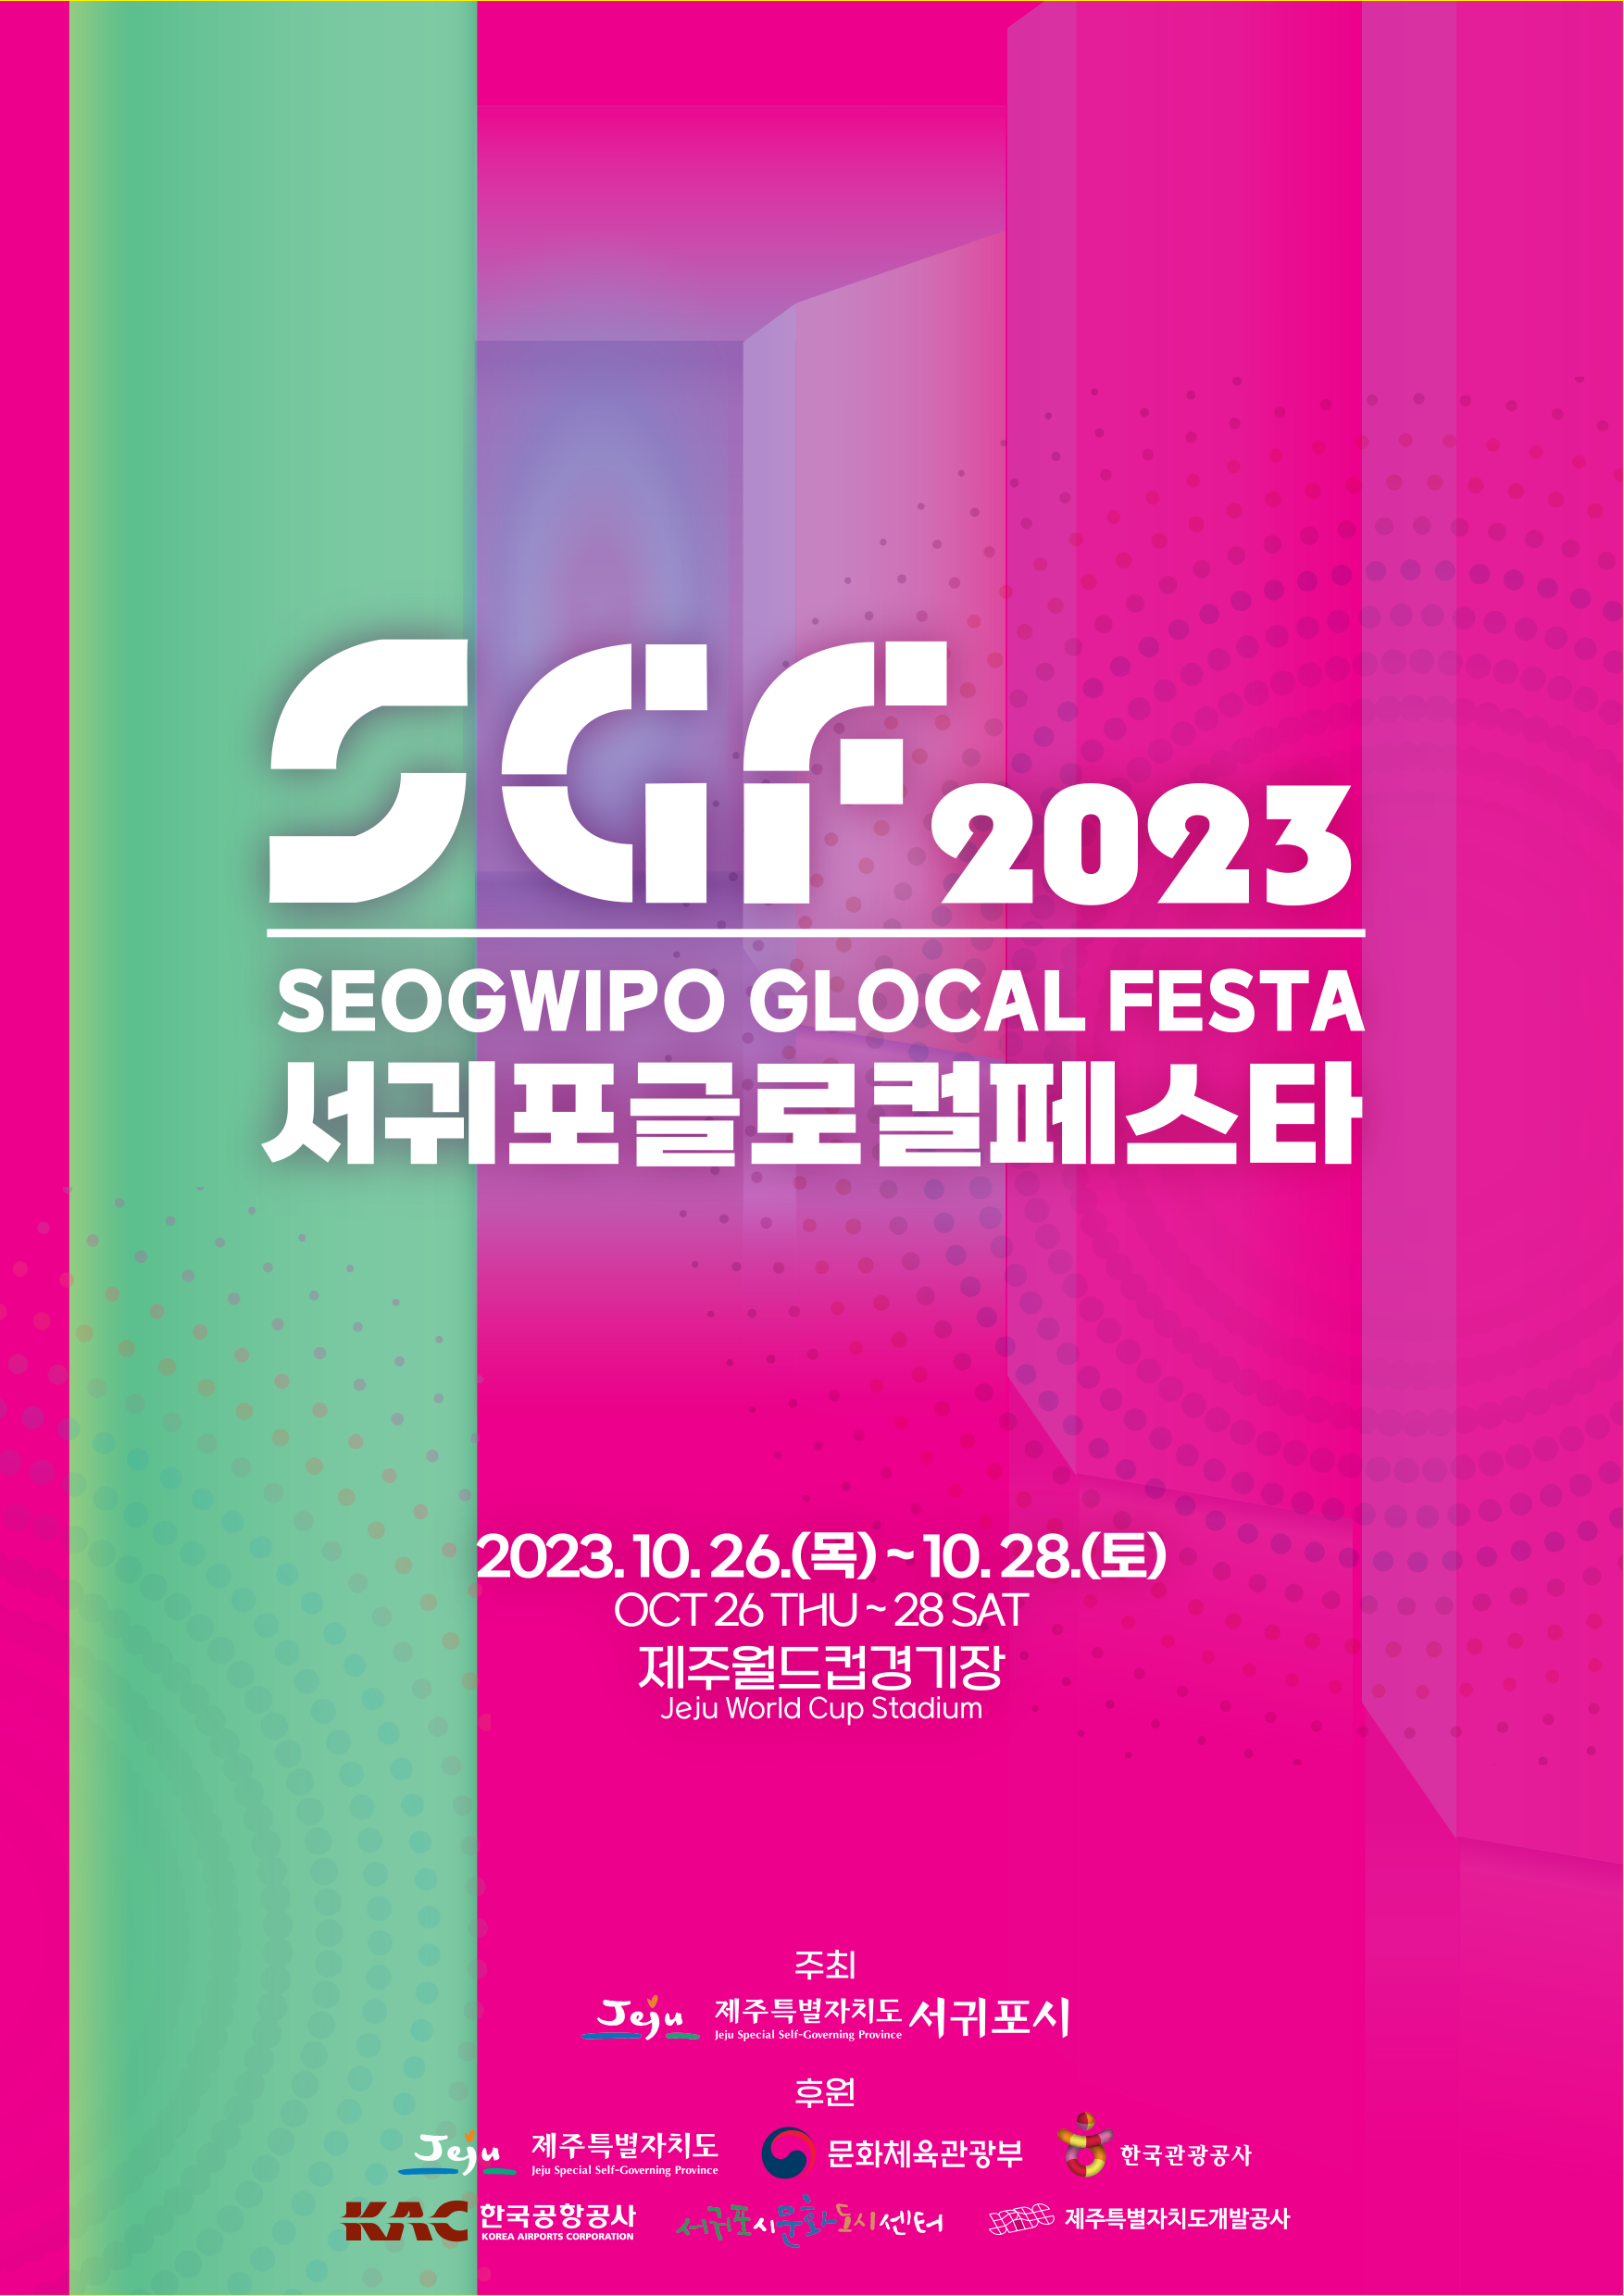 2023 SGF 공식 리플렛 앞장